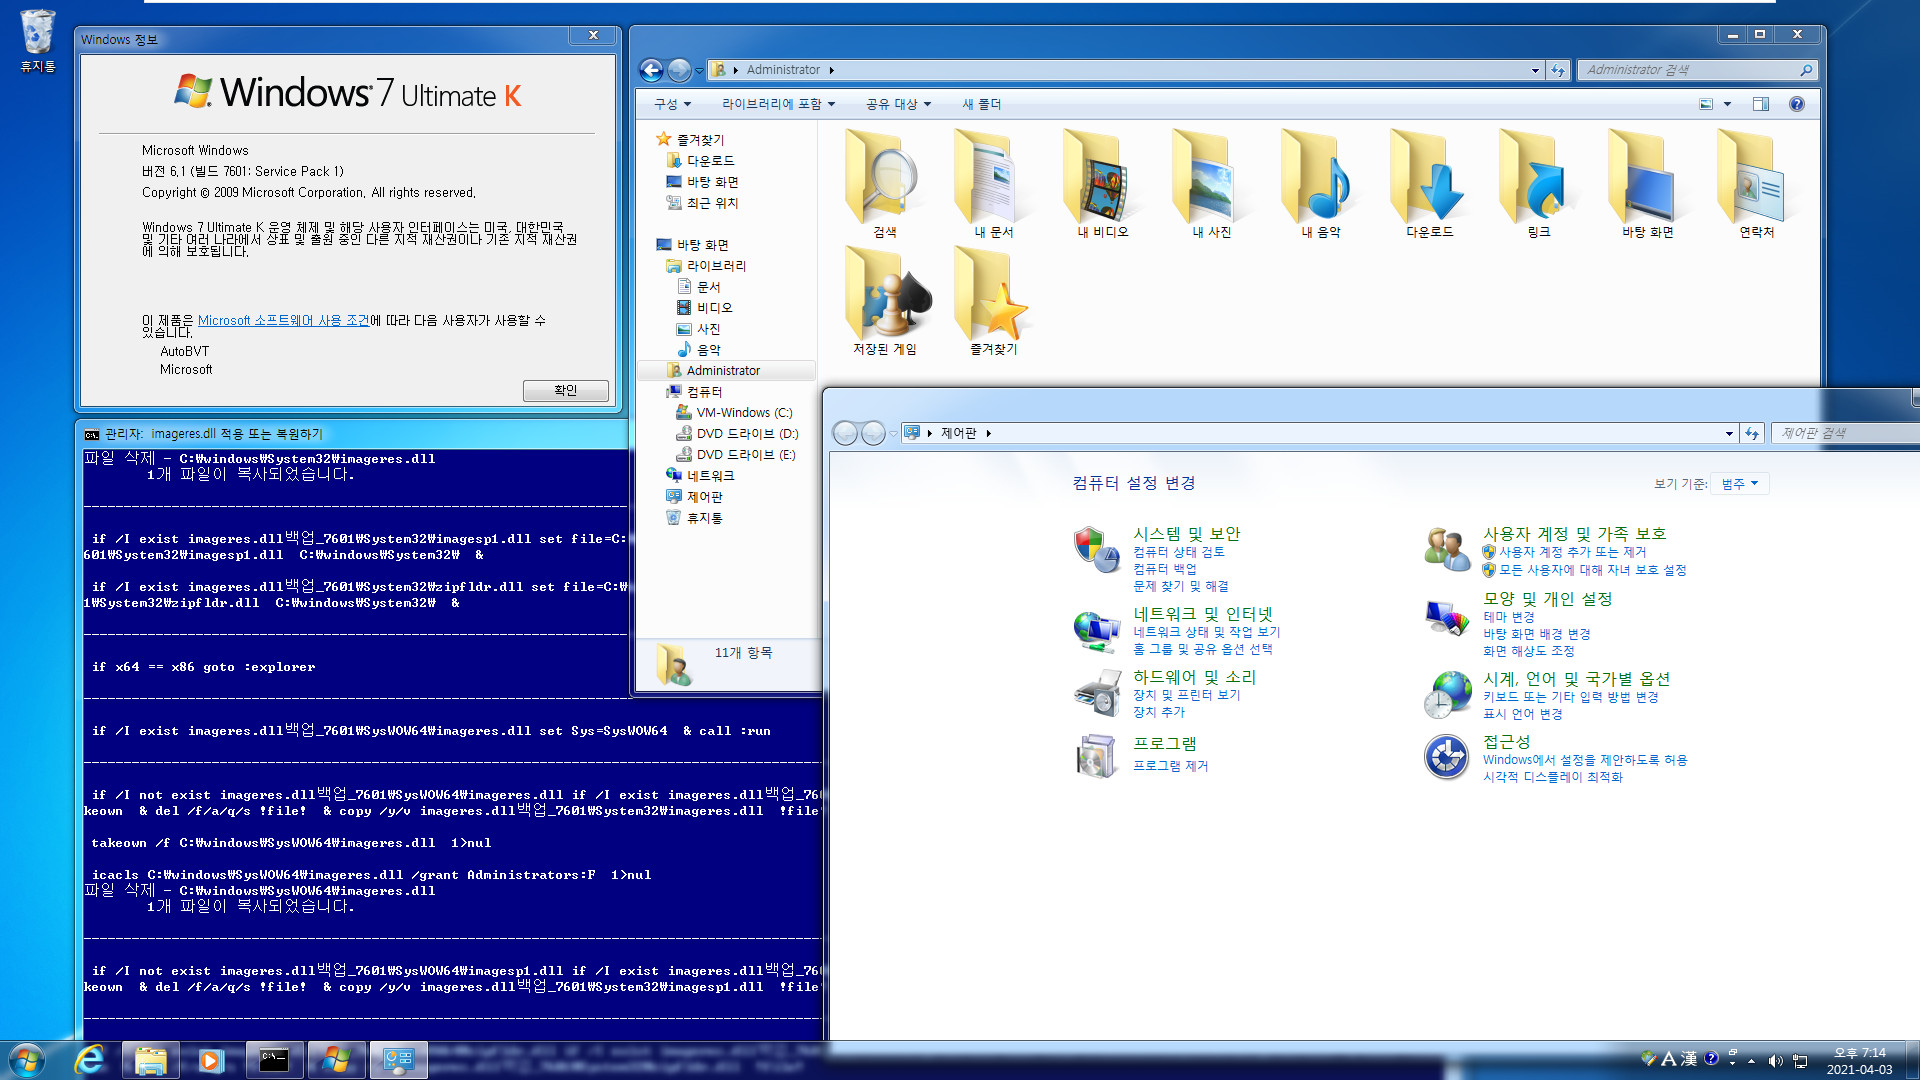 imageres.dll 윈도우 10 버전 1809와 윈도우 7 호환되도록 2가지 윈도우의 원본 imageres.dll을 합치고, 윈도우 7 라이브러리 안에 폴더 아이콘들 변경하여 테스트 2021-04-03_191423.jpg